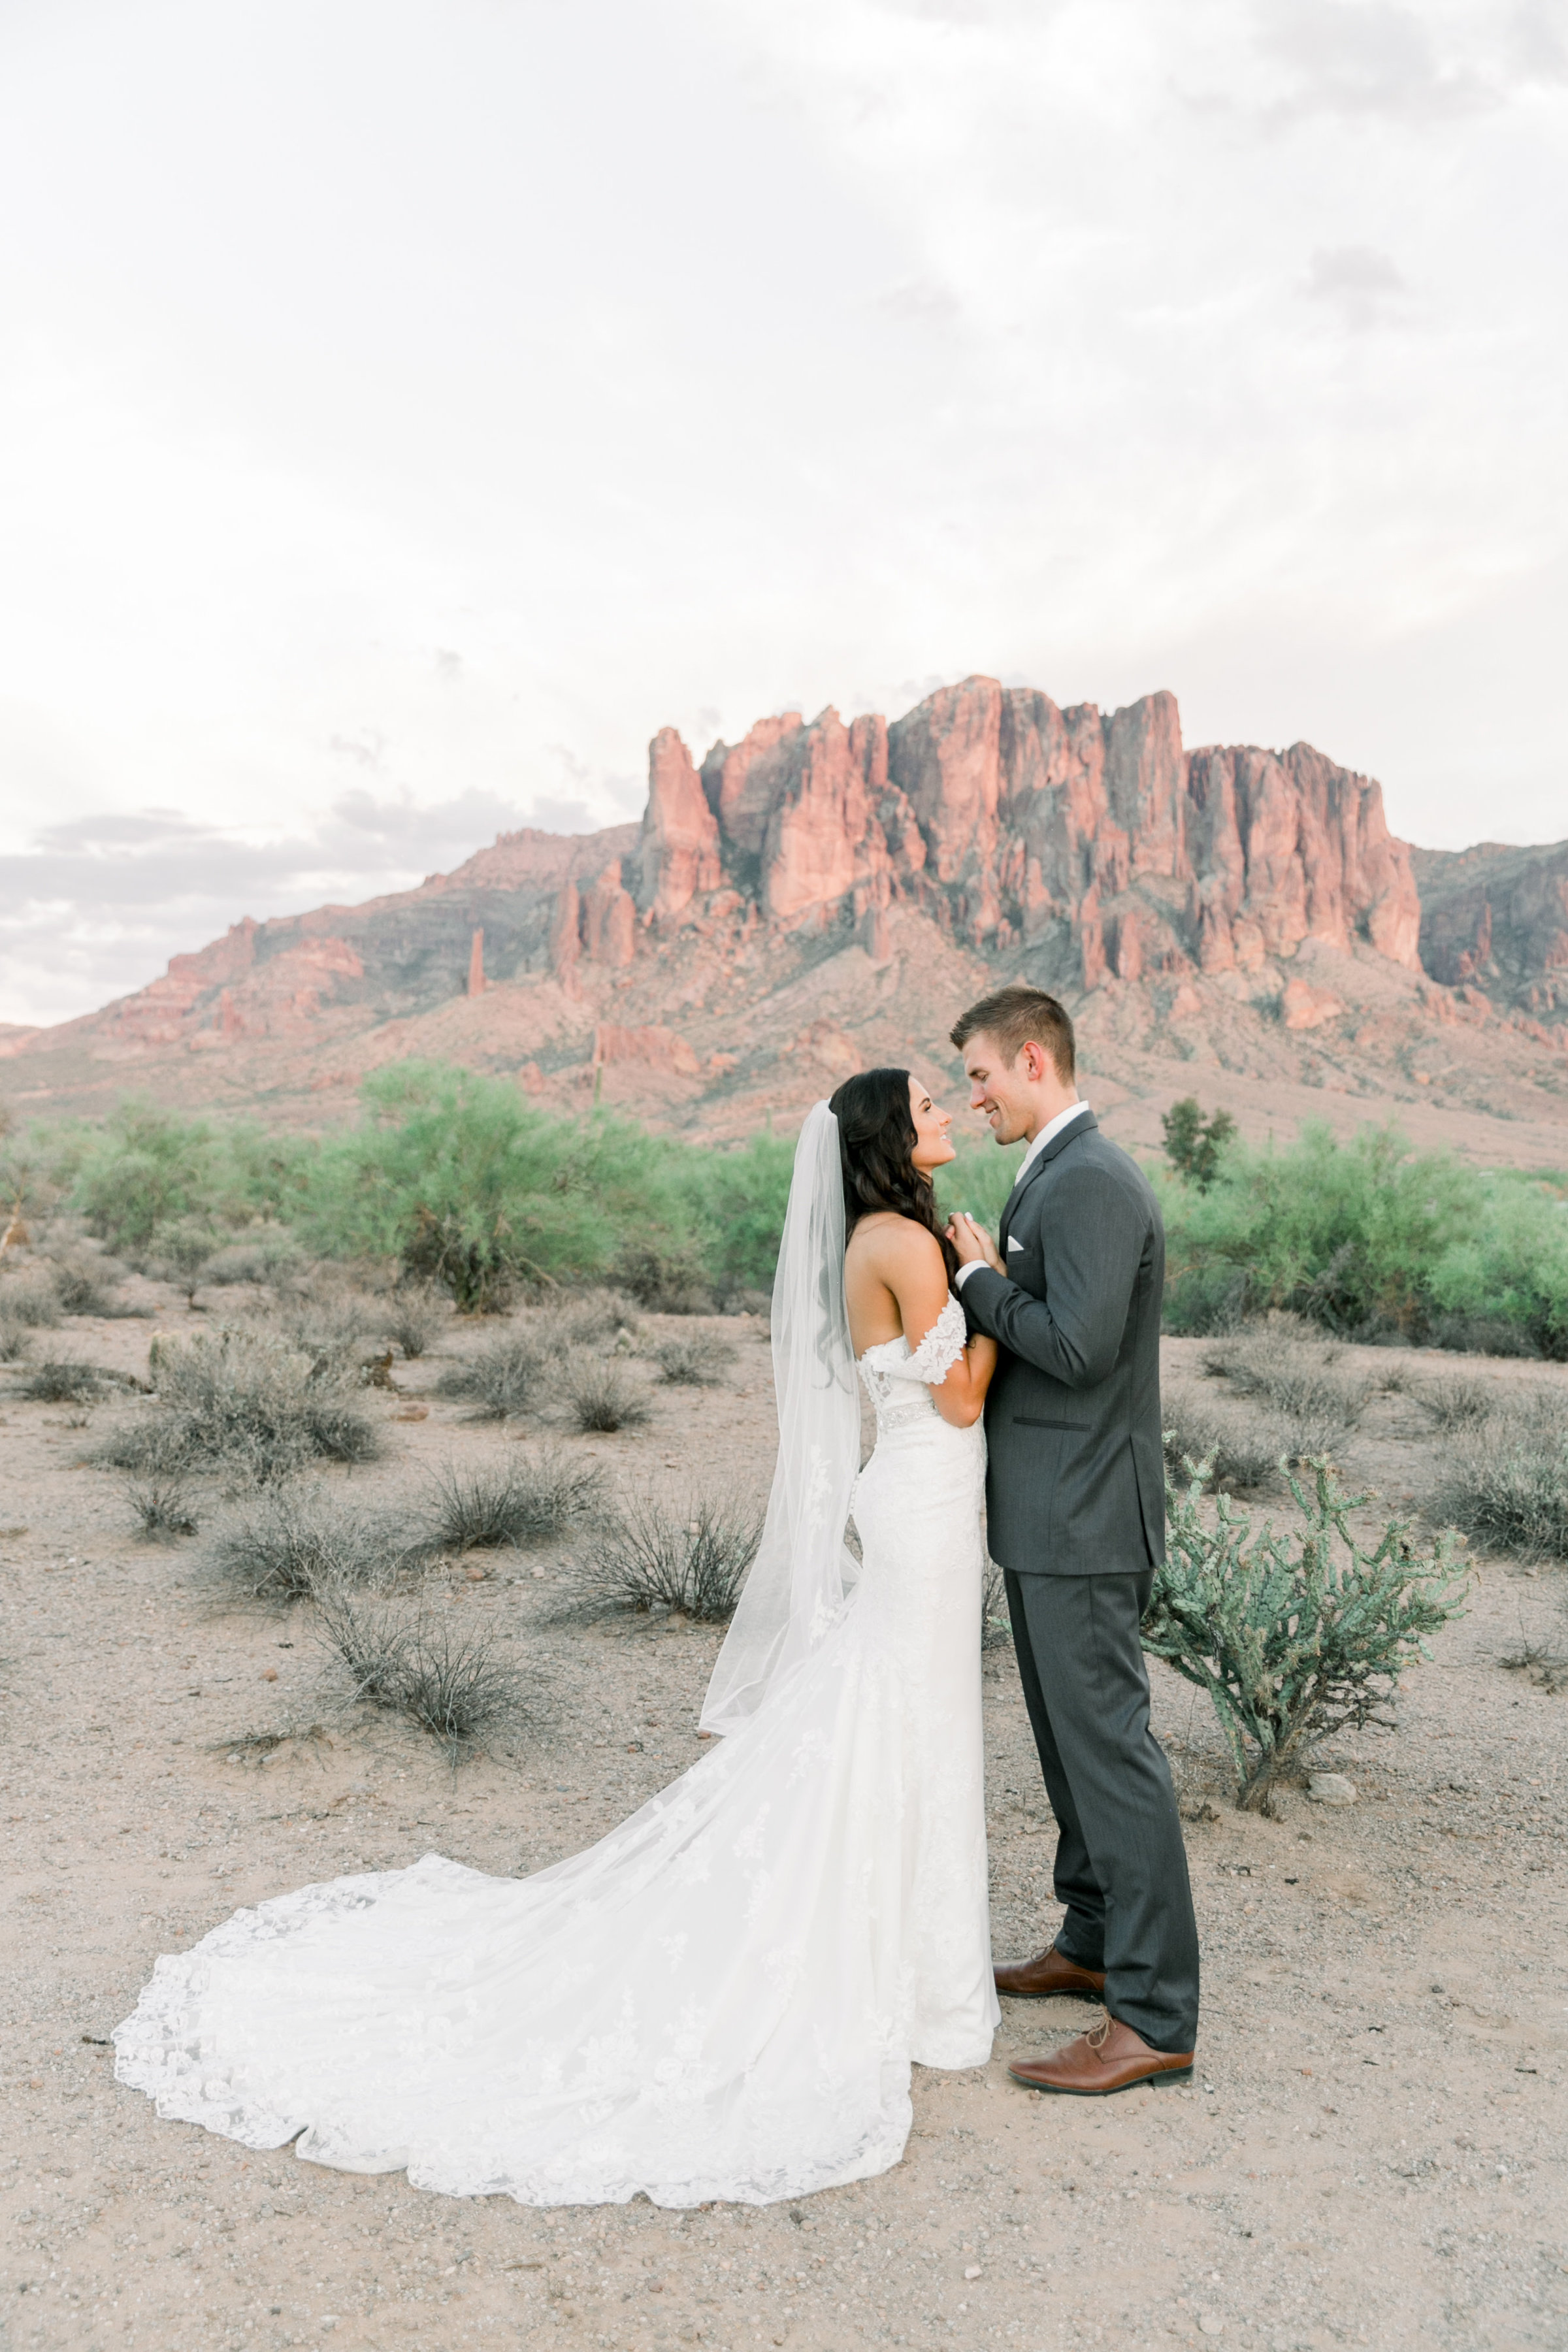 Karlie Colleen Photography - Arizona Wedding - The Paseo Venue - Jackie & Ryan -674